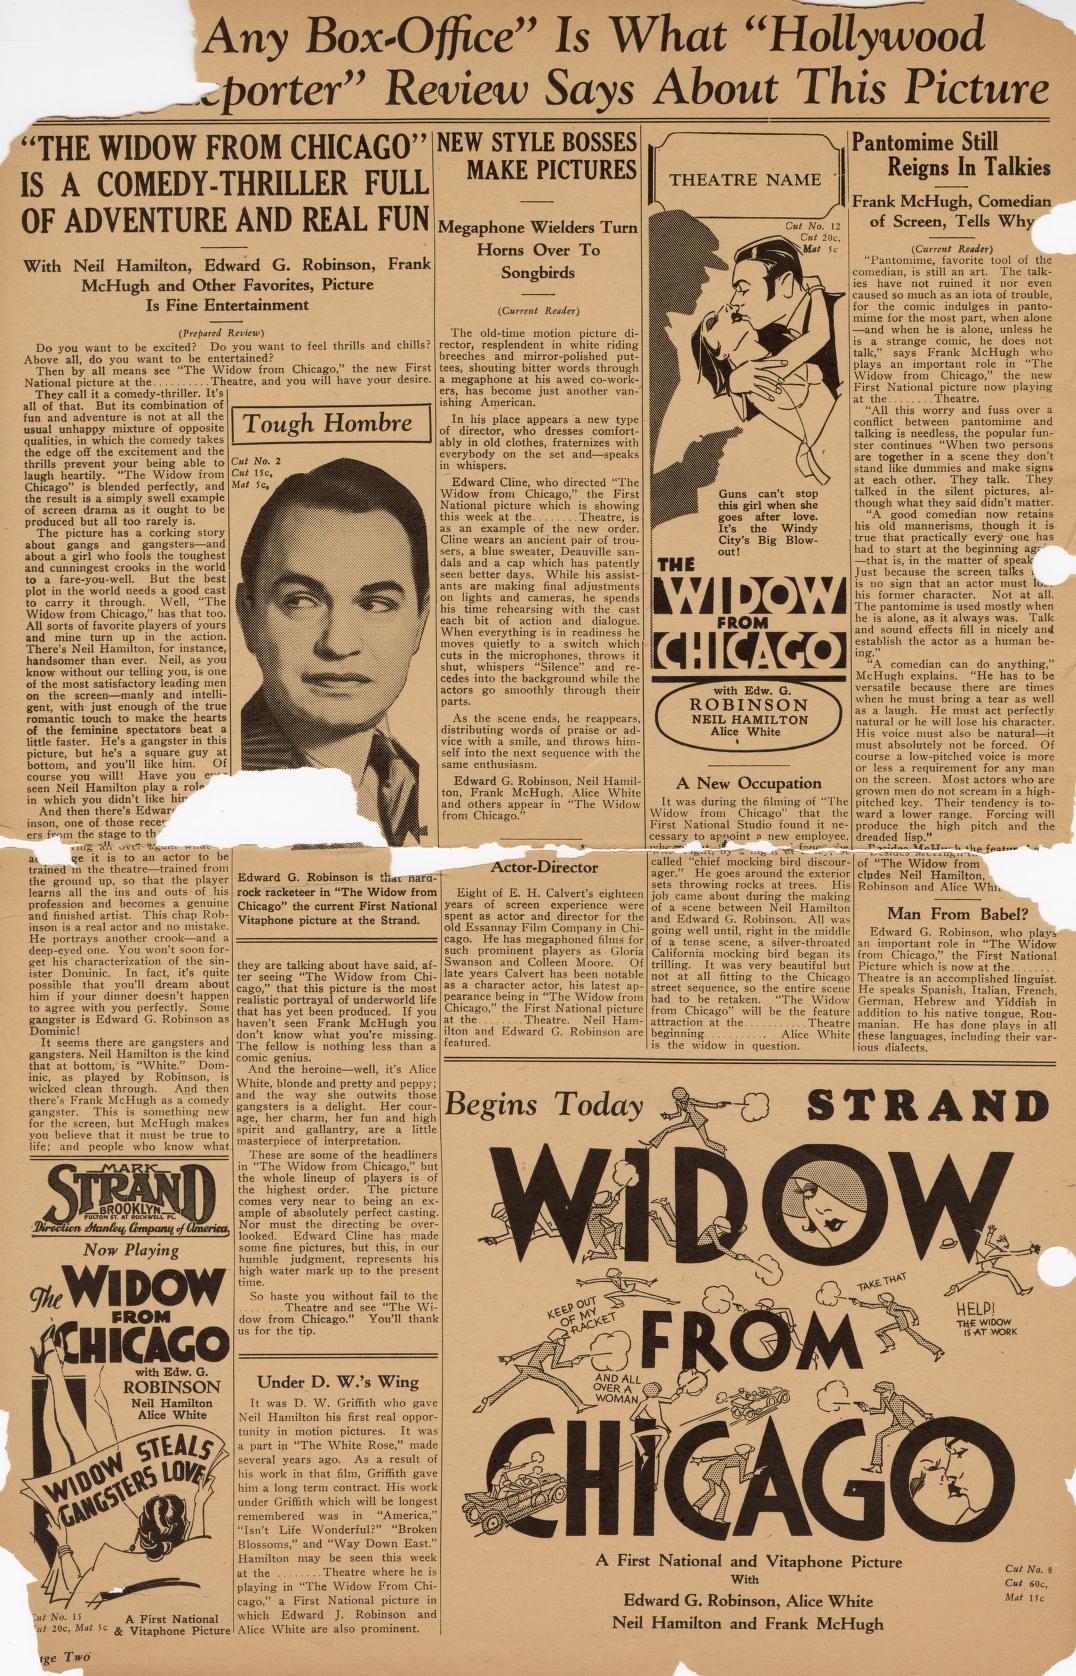 The Widow from Chicago (Warner Bros. Pressbook, 1930)